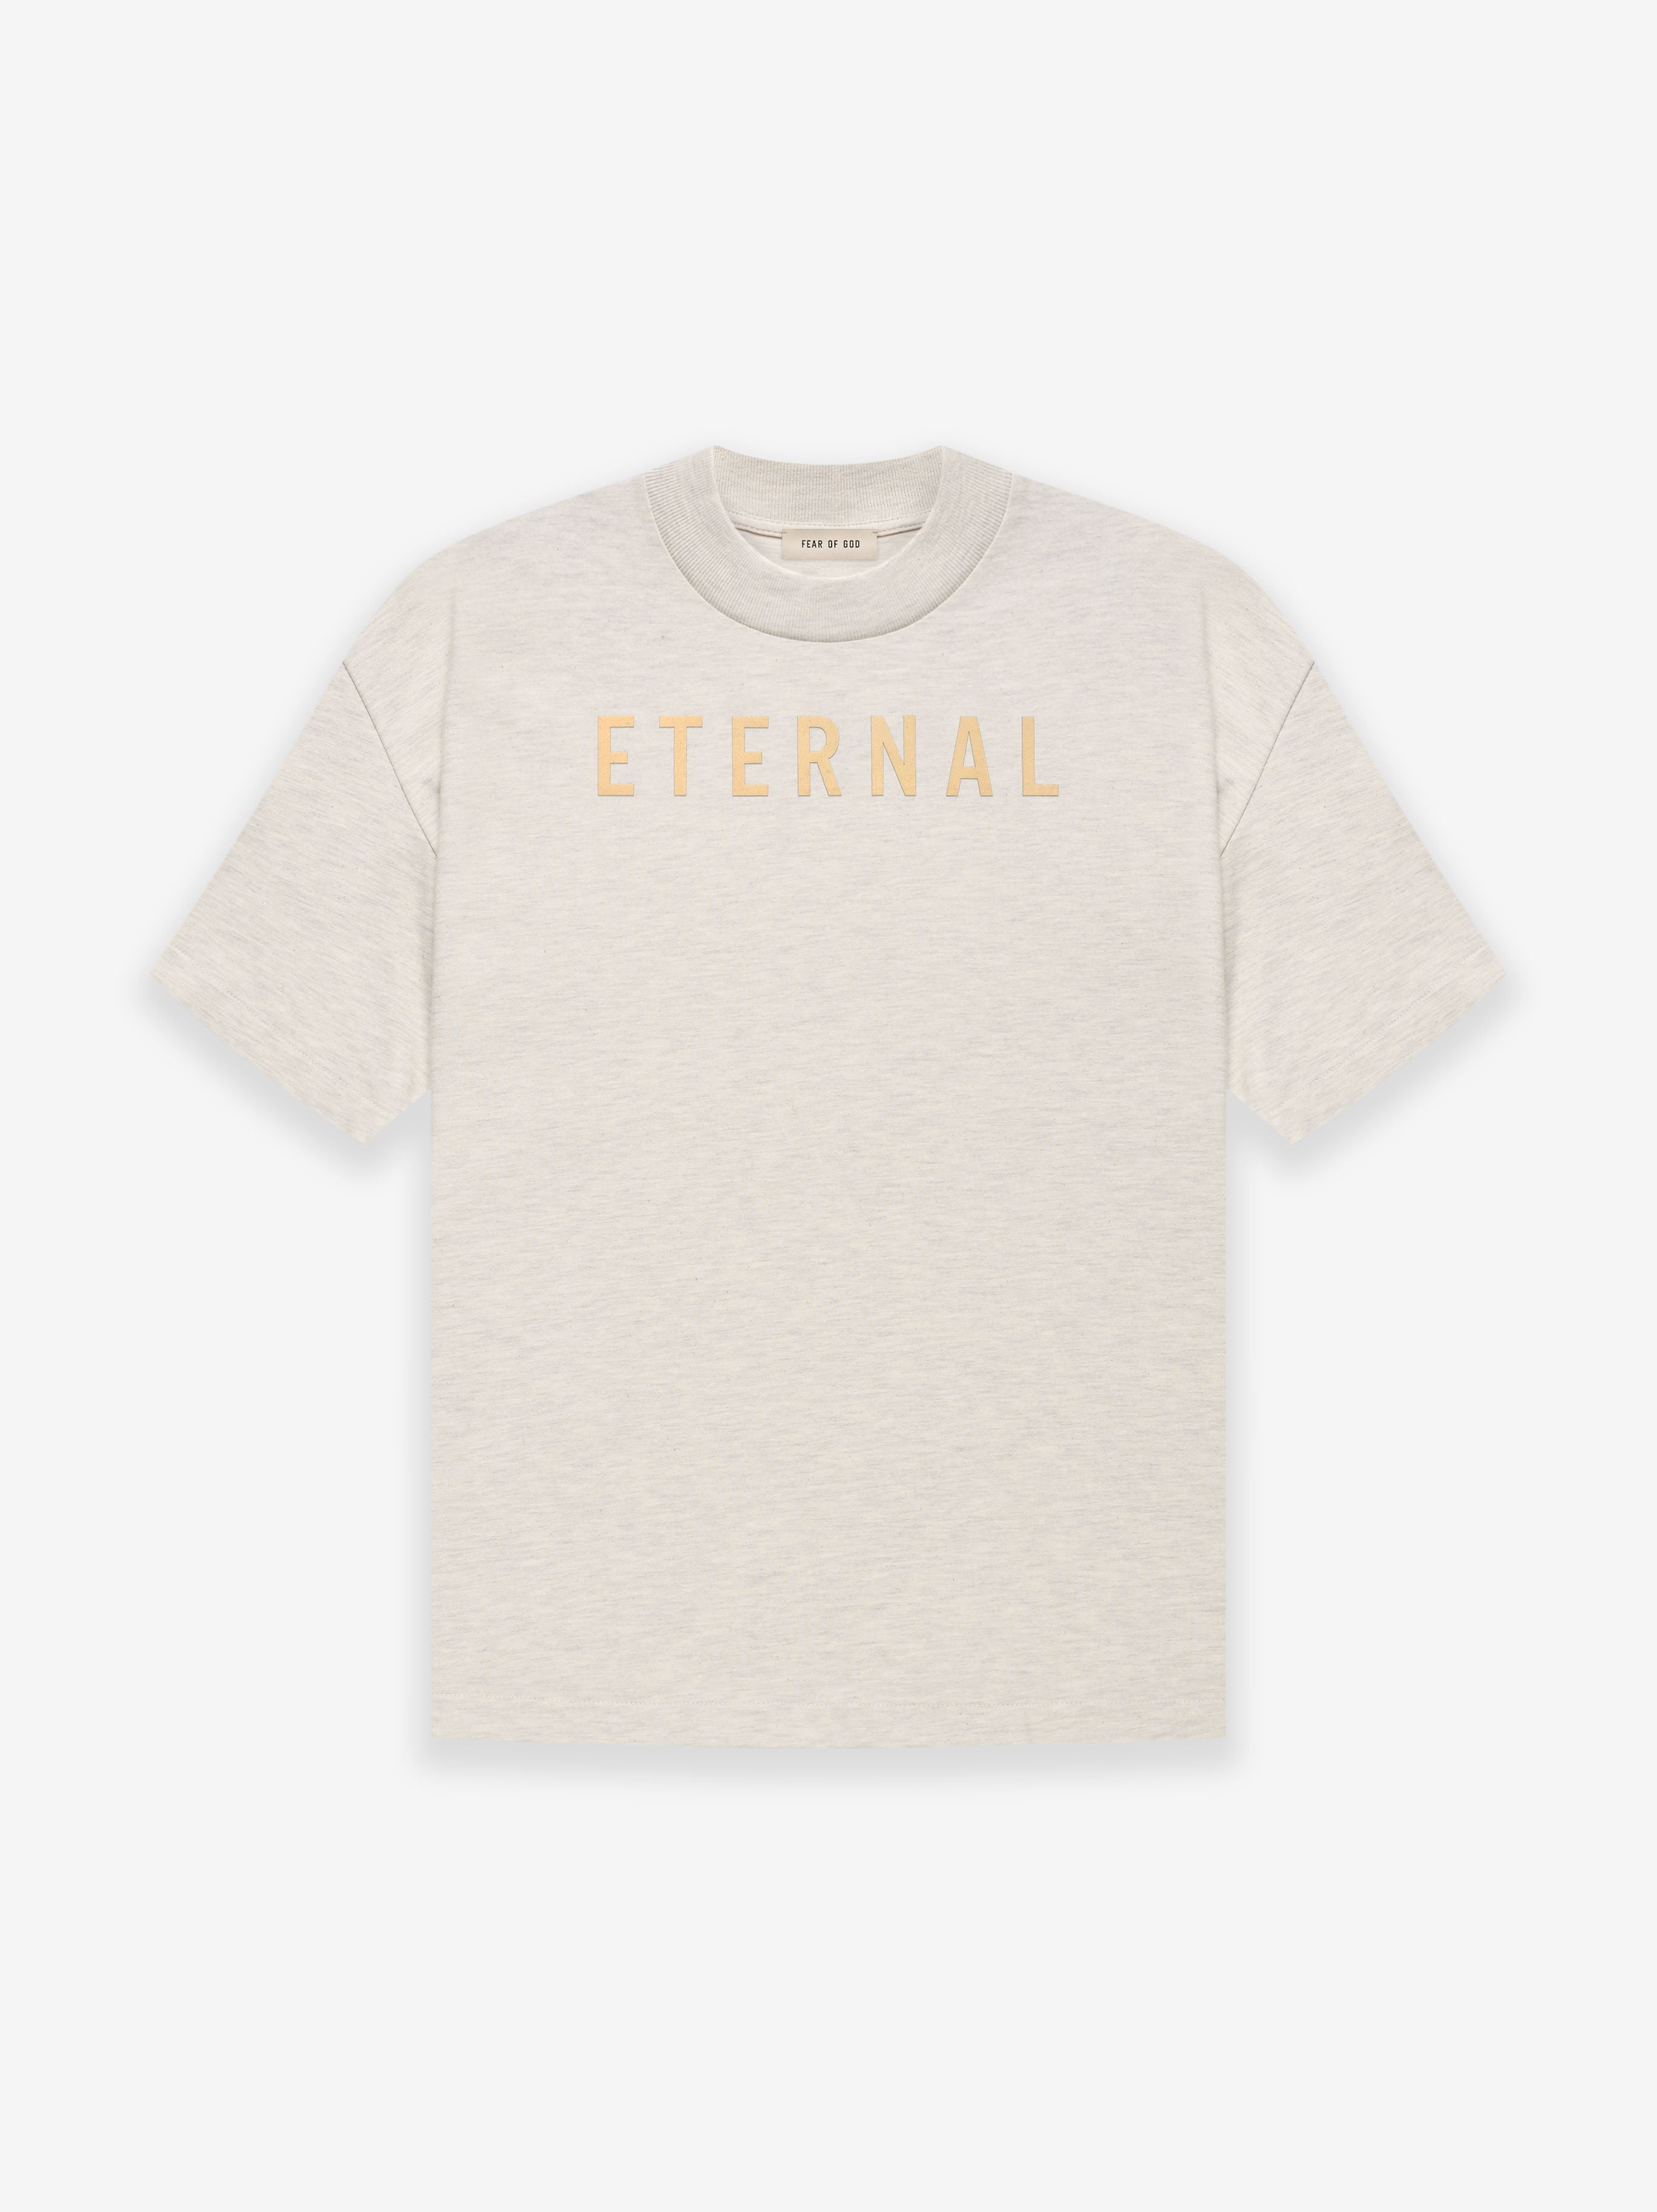 Fear of God Eternal Cotton Ss T-Shirt in Cement | Fear of God